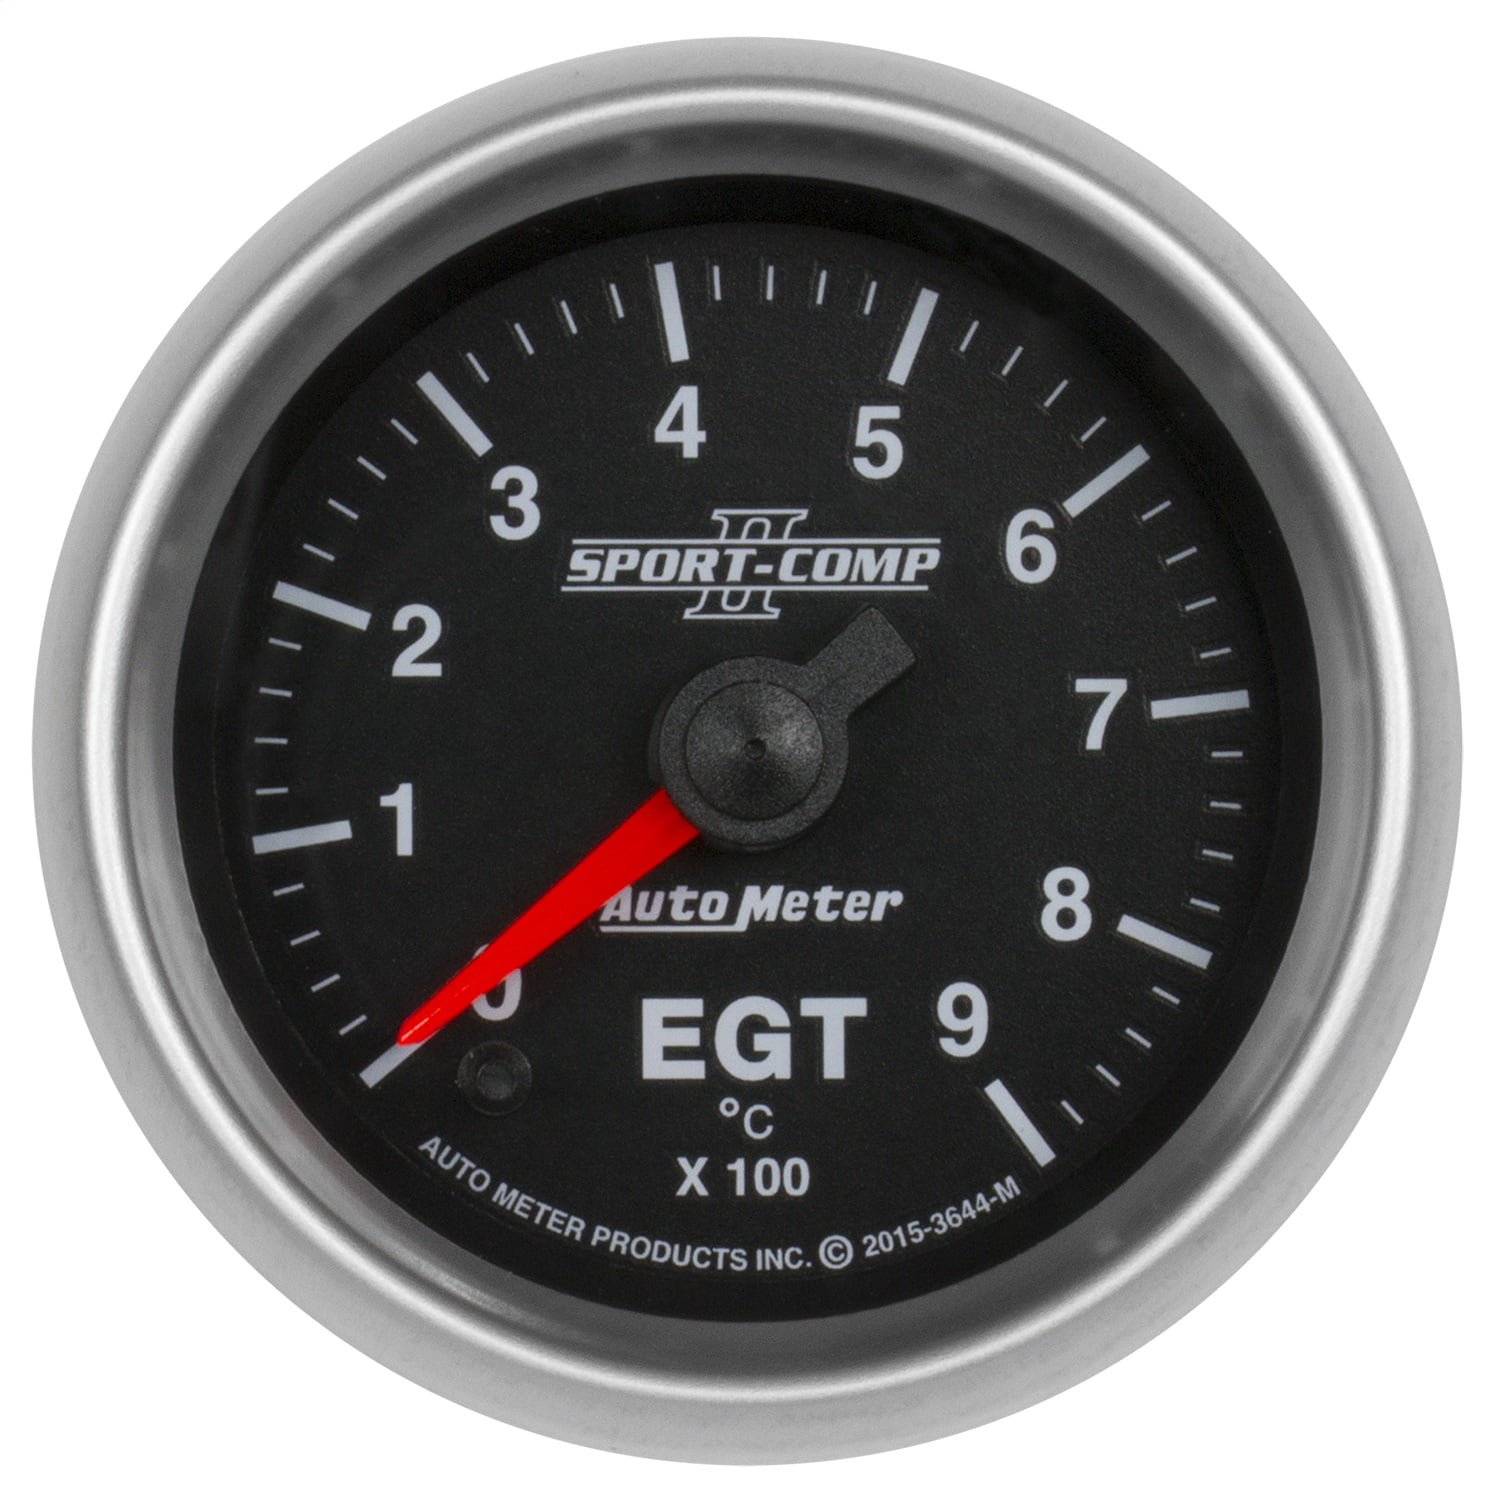 Auto Meter 3644 Sport-Comp II Electric Pyrometer Gauge Kit 